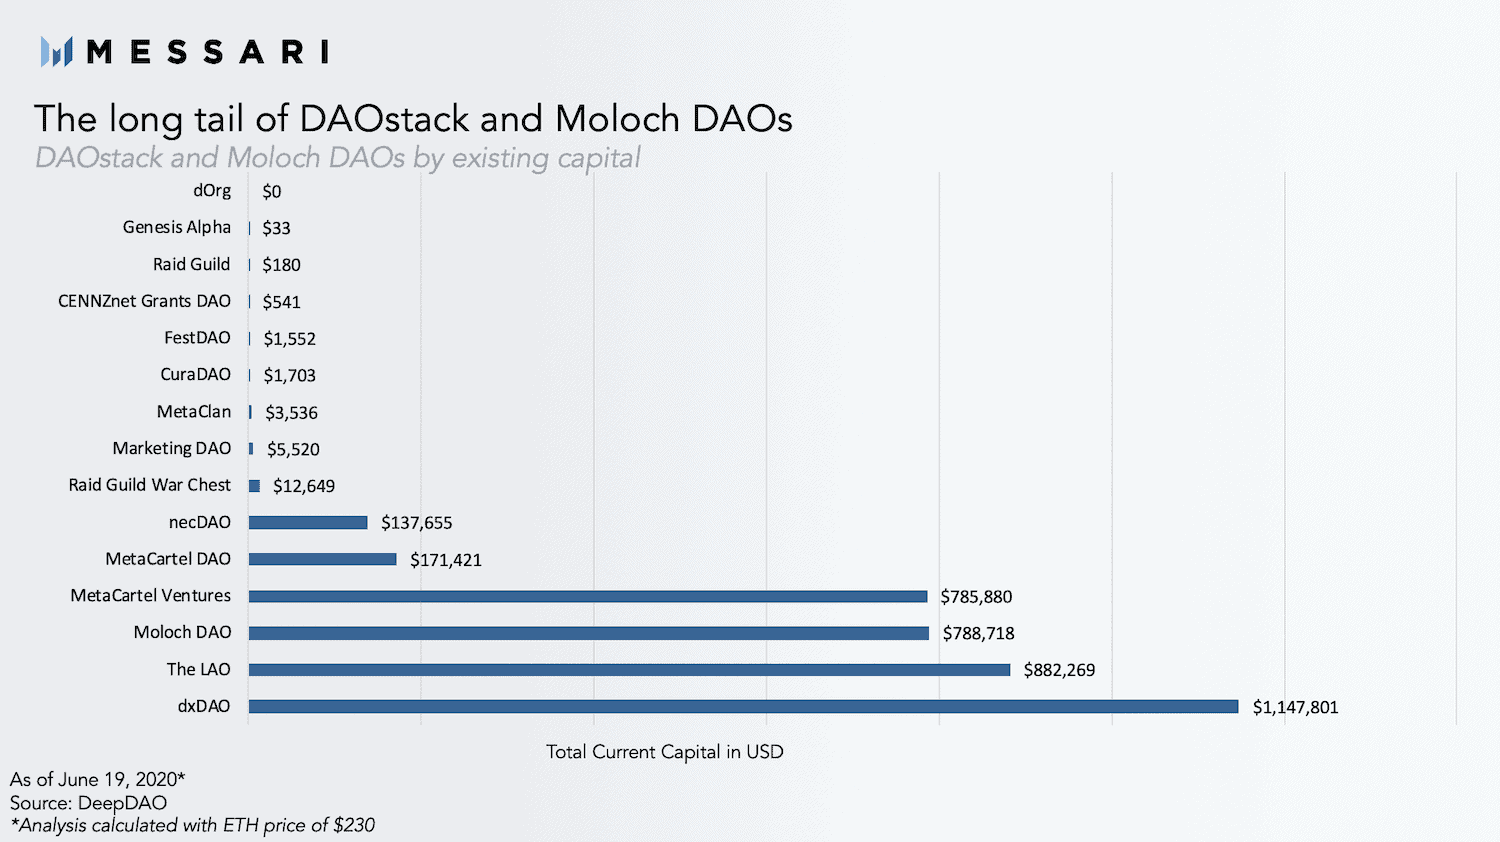 Snapshot of DAO assets. Source: Messari Crypto